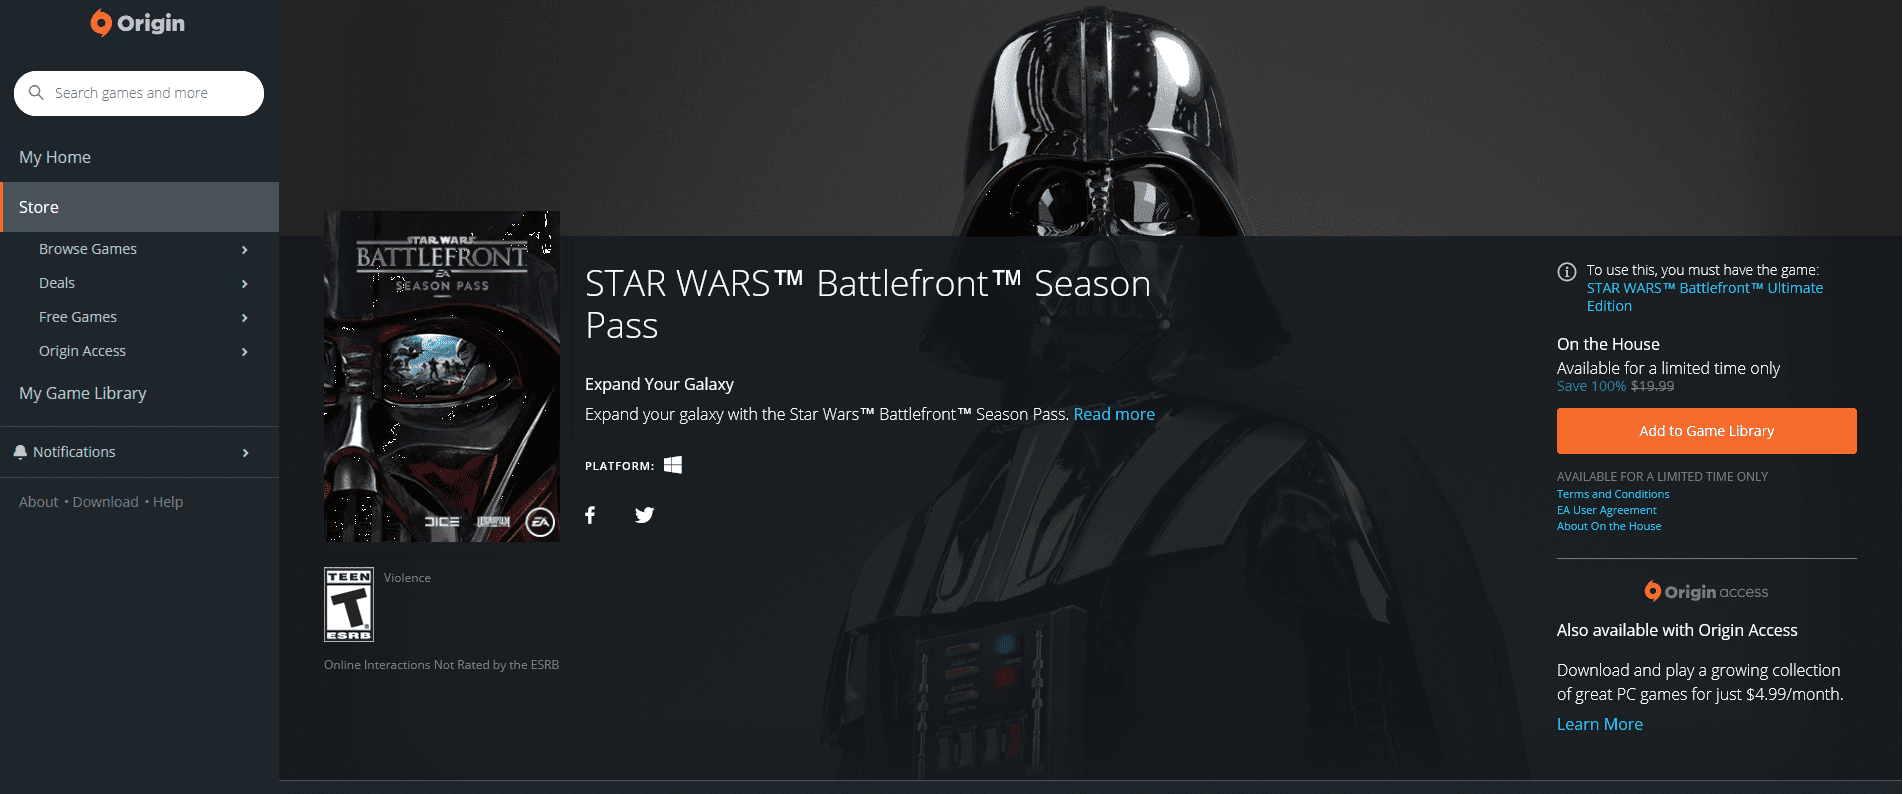 STAR WARS™ Battlefront™ Season Pass Free on Origin